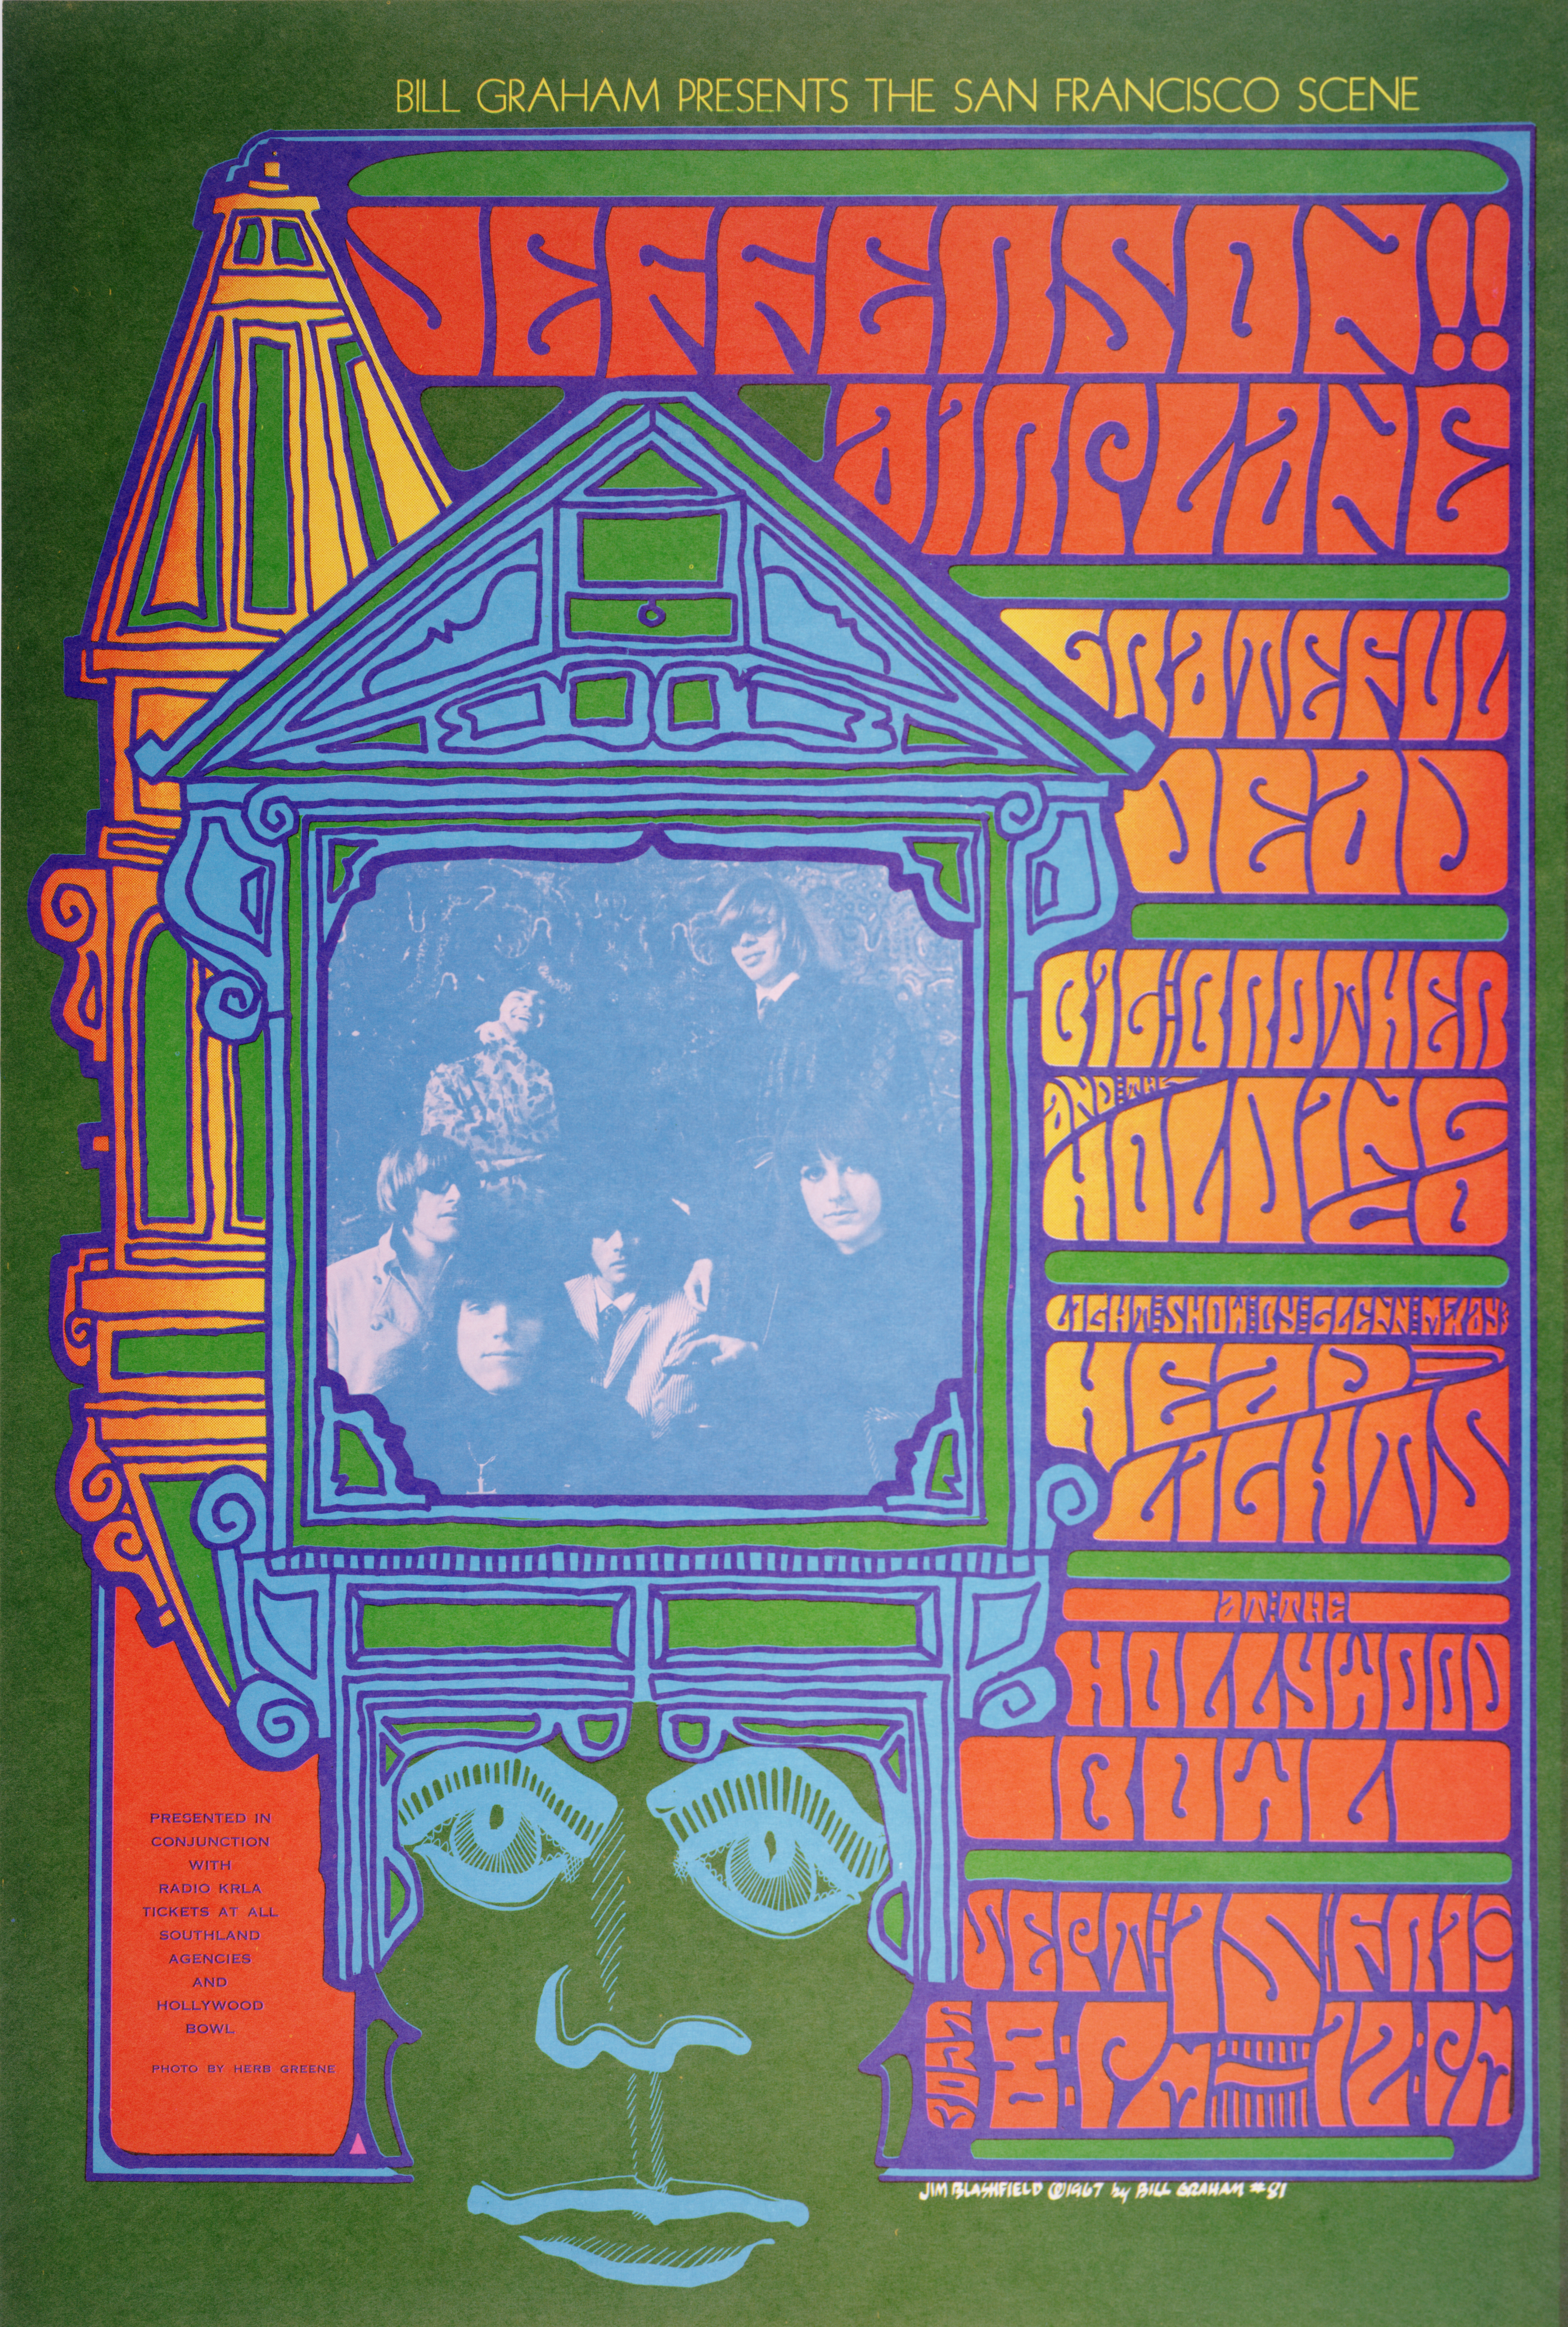 Jefferson Airplane, Grateful Dead; Hollywood Bowl, September 15, 1967